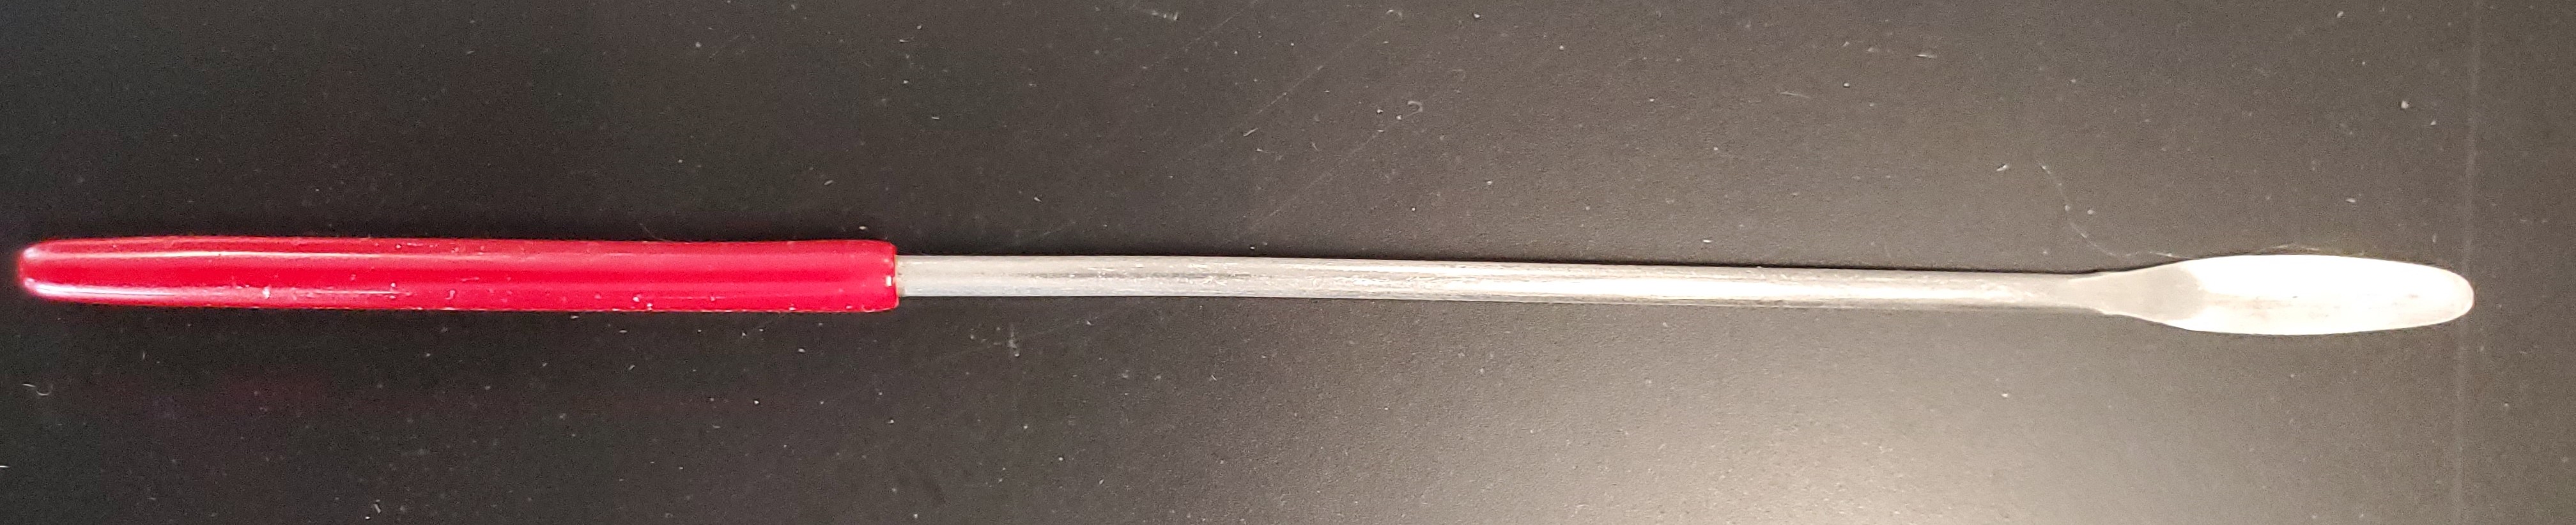 Picture of a small spatula